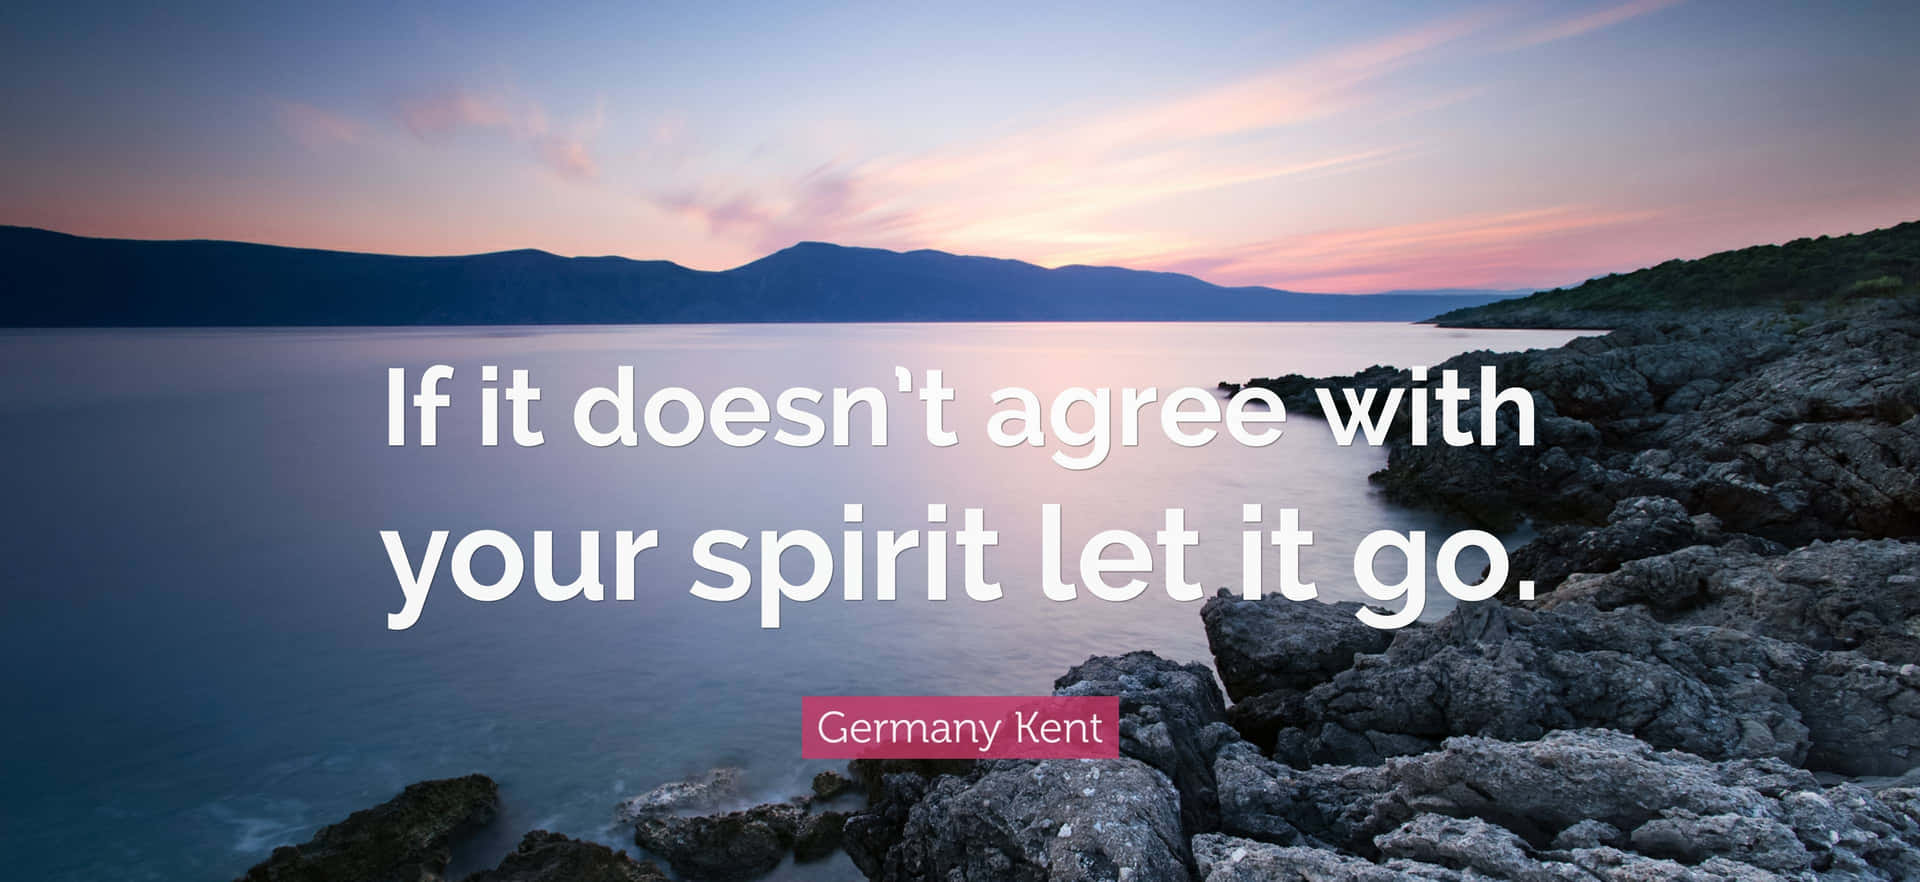 Let It Go Germany Kent